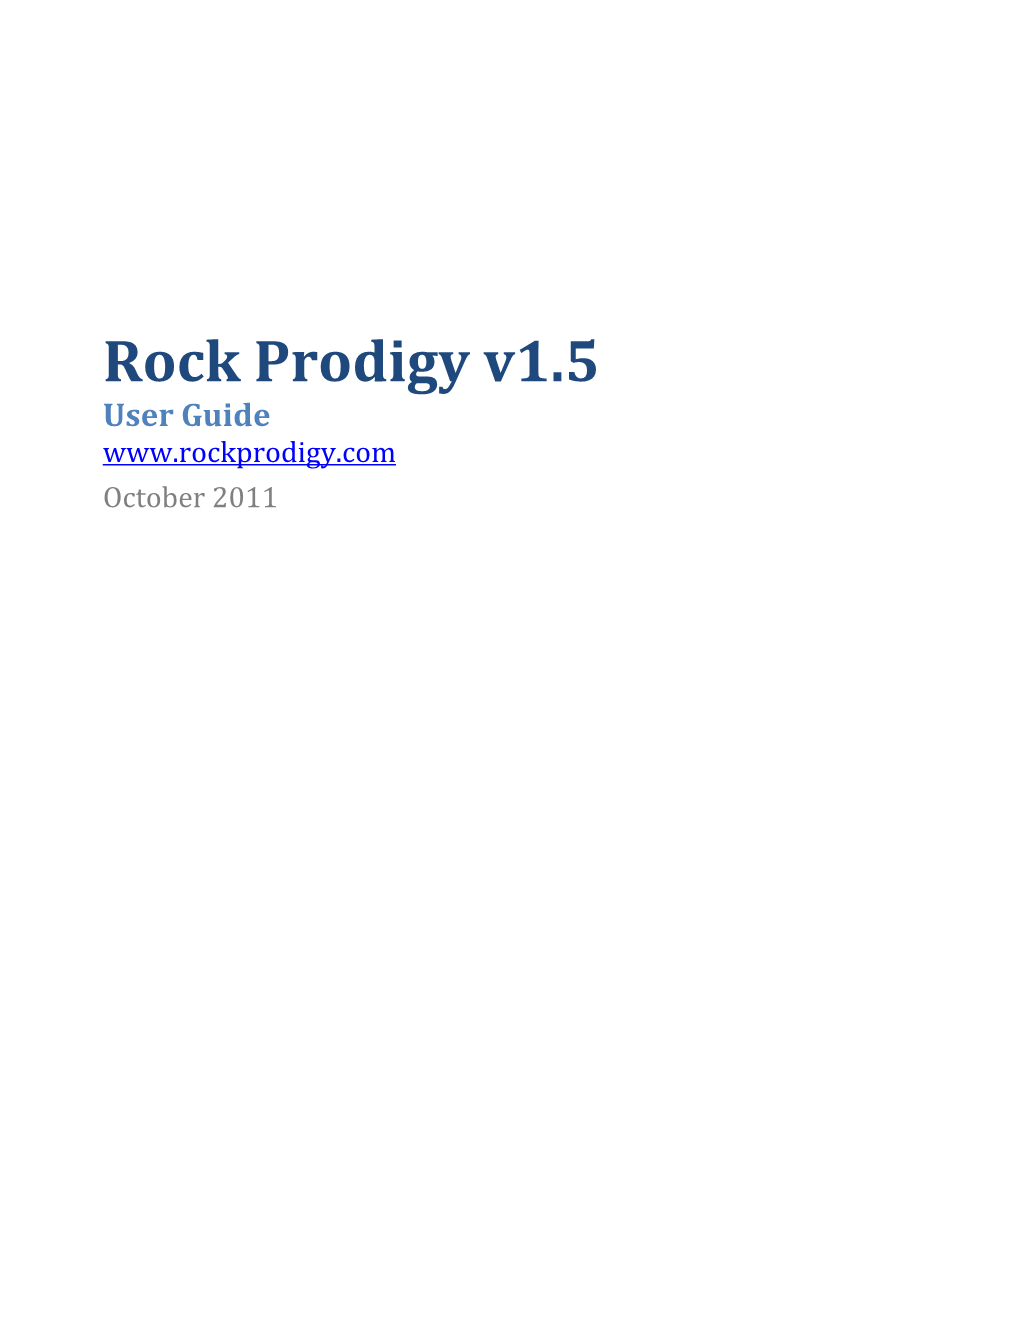 Rock Prodigy V1.5 User Guide October 2011 Rock Prodigy V1.5 User Guide –Oct 22, 2011